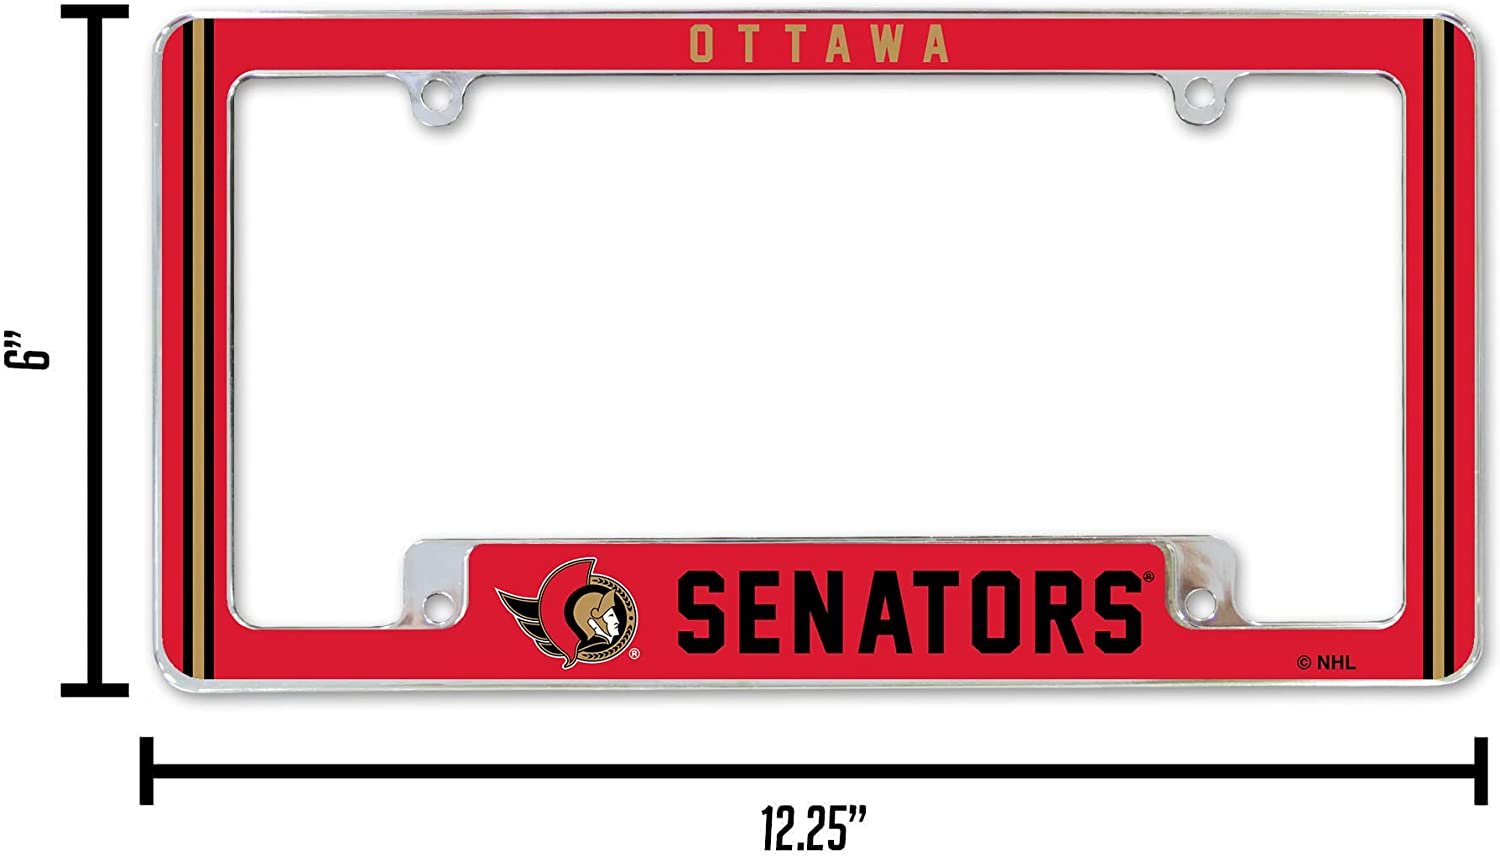 Ottawa Senators Metal License Plate Frame Chrome Tag Cover Alternate Design 6x12 Inch